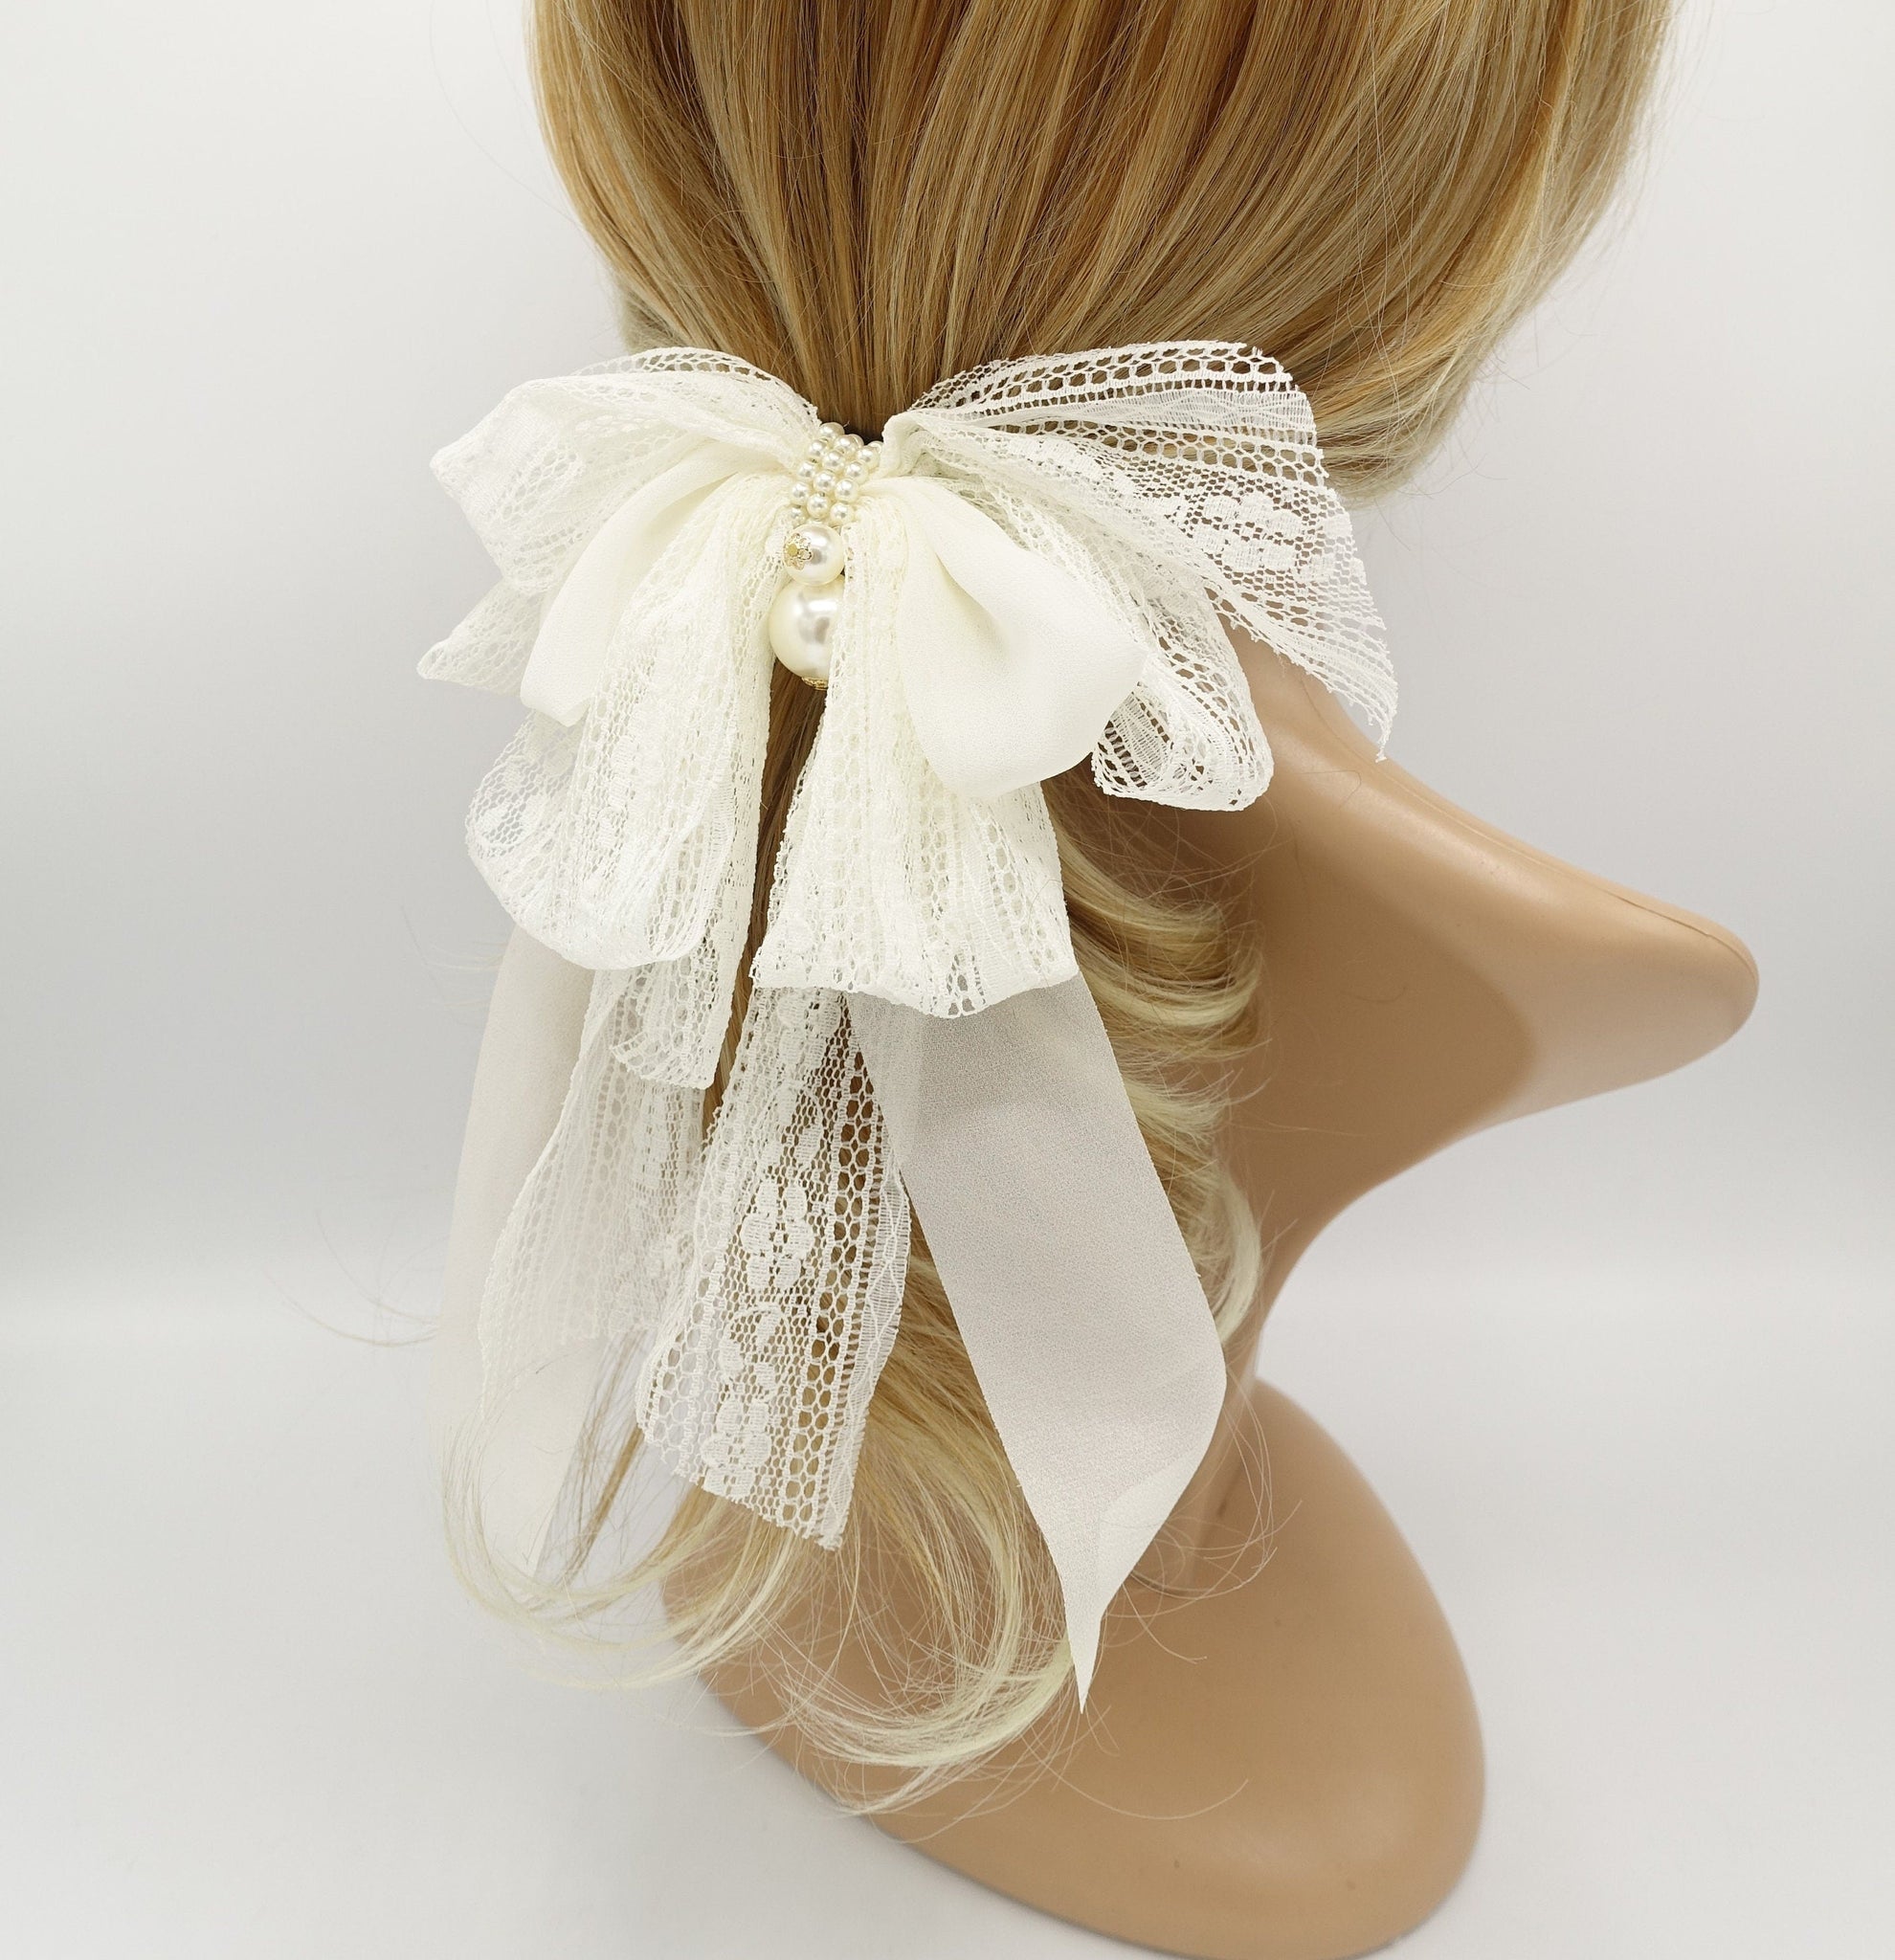 veryshine.com Barrette (Bow) Cream white Lace Chiffon Long Tail Bow Pearl Ornamented Romantic French Hair Barrette